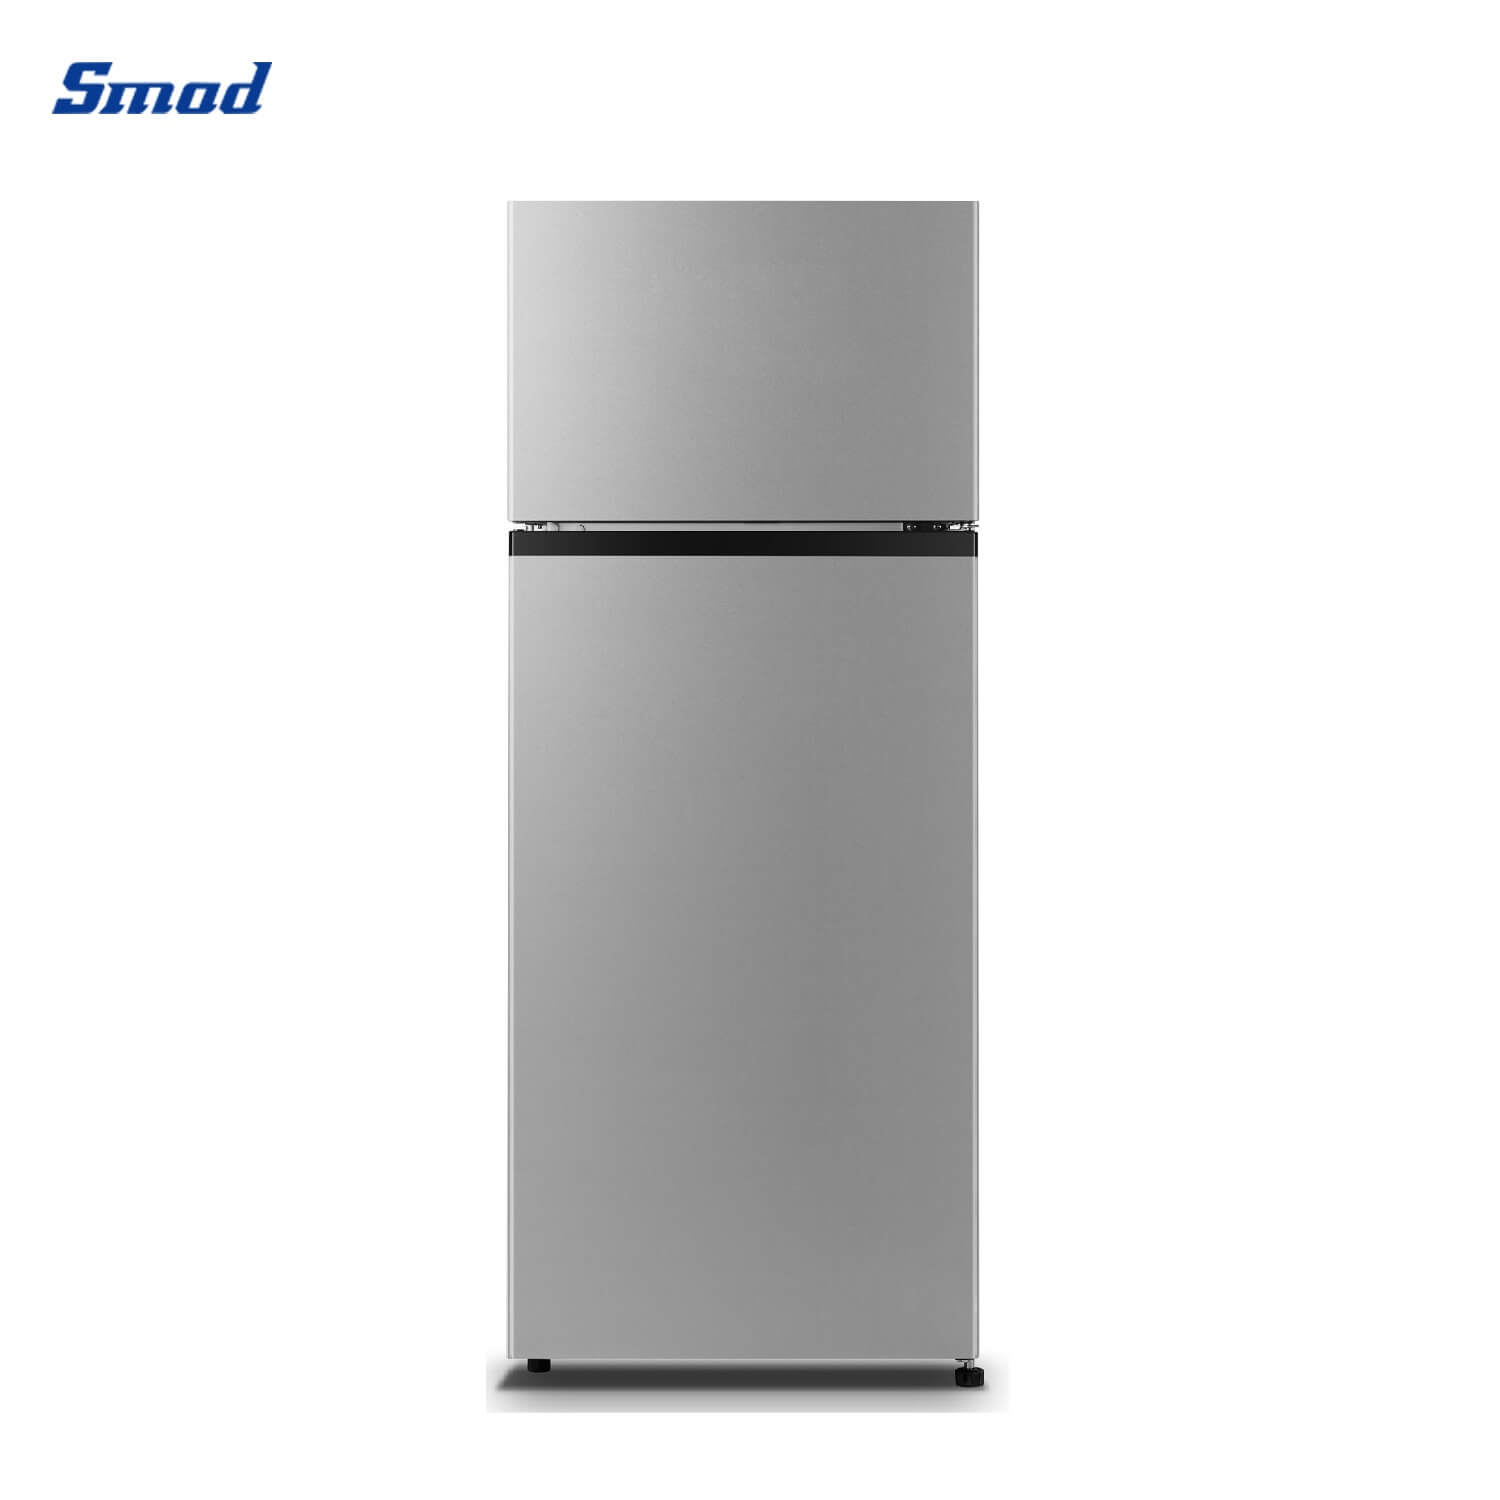 Smad 205L Top Freezer Double Door Refrigerator with Manual Defrost